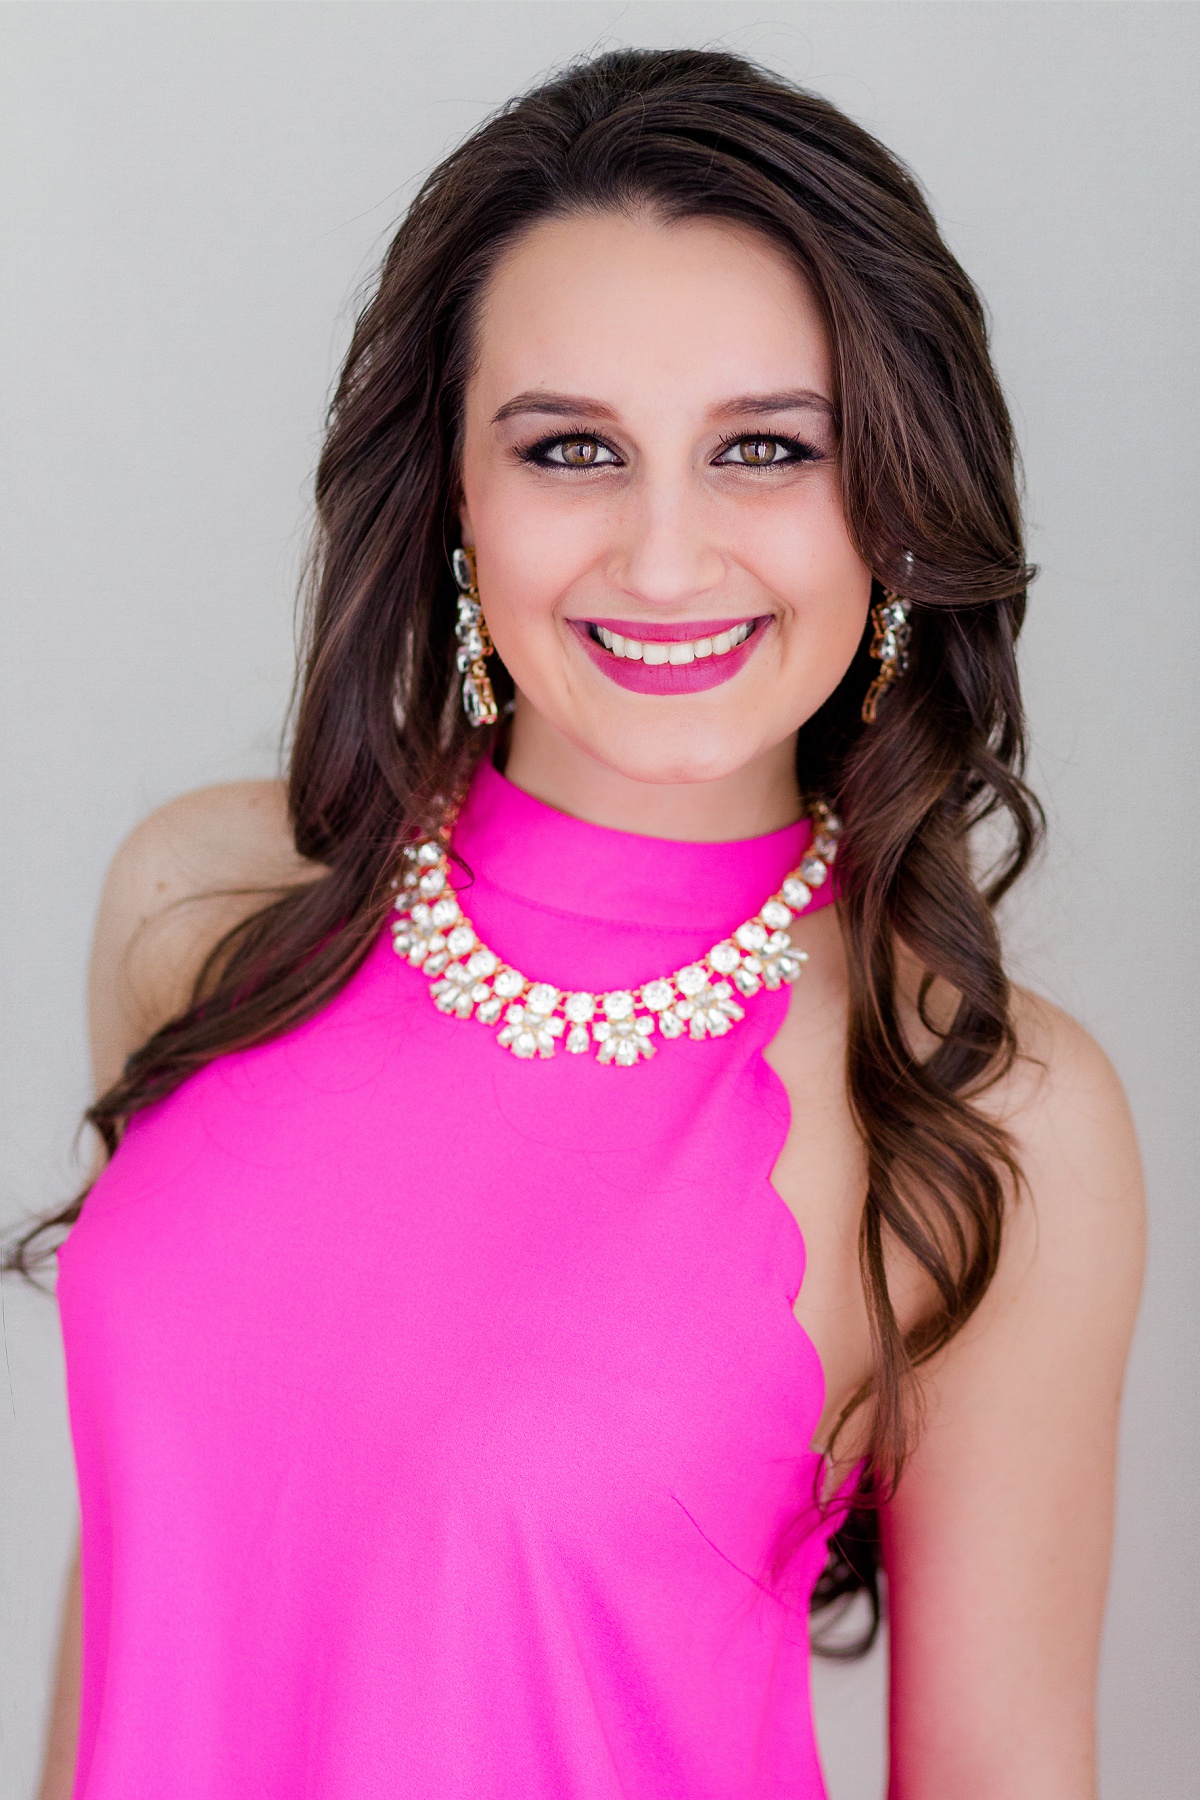 Sarah Labine Miss Northwest 2015 | Headshots by Amber Langerud Photography out of Audubon, MN